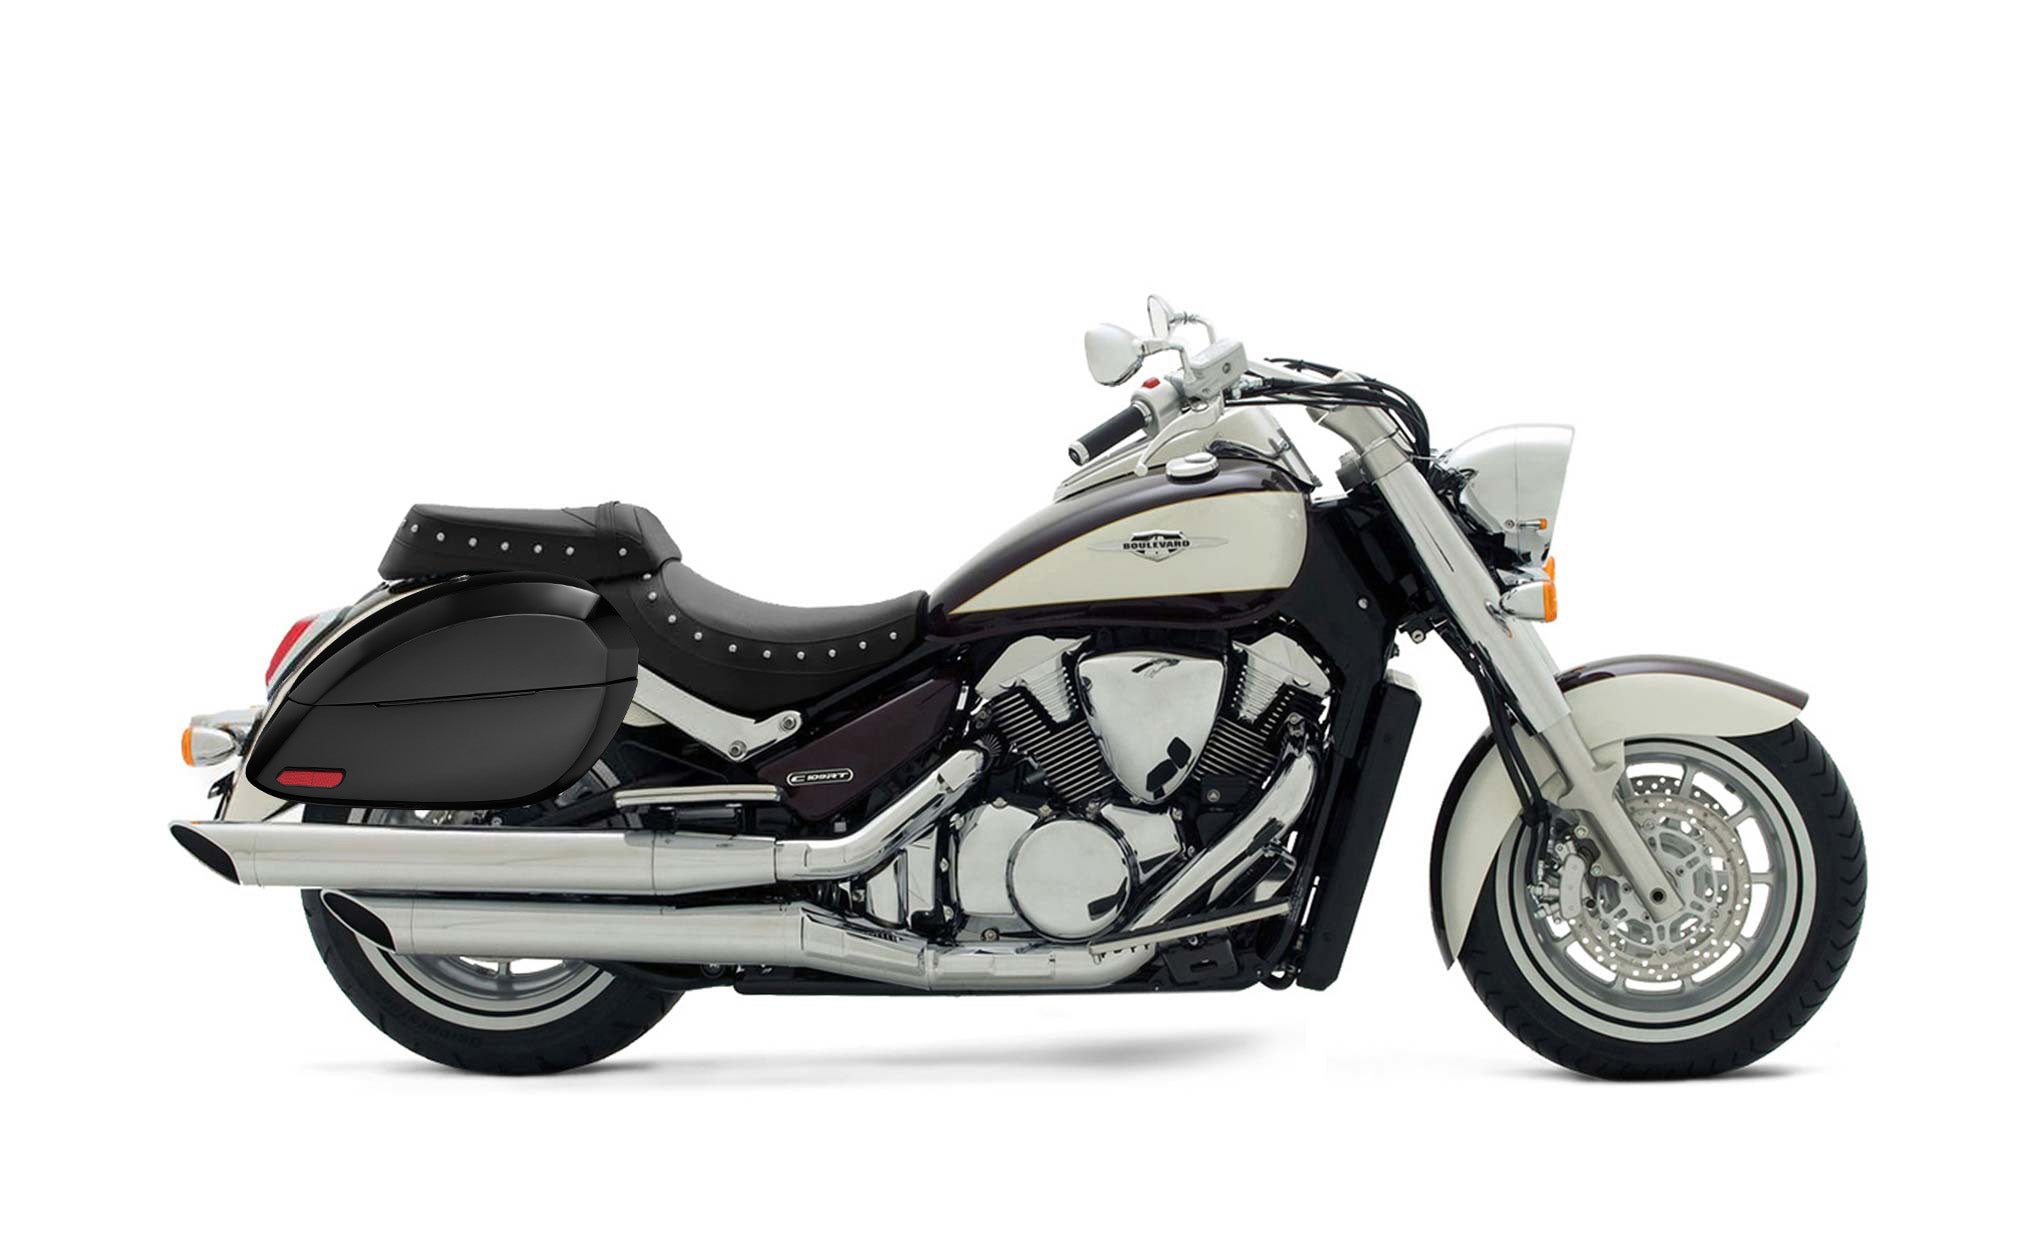 Viking Phantom Large Suzuki Boulevard C109 Painted Motorcycle Hard Saddlebags Engineering Excellence with Bag on Bike @expand